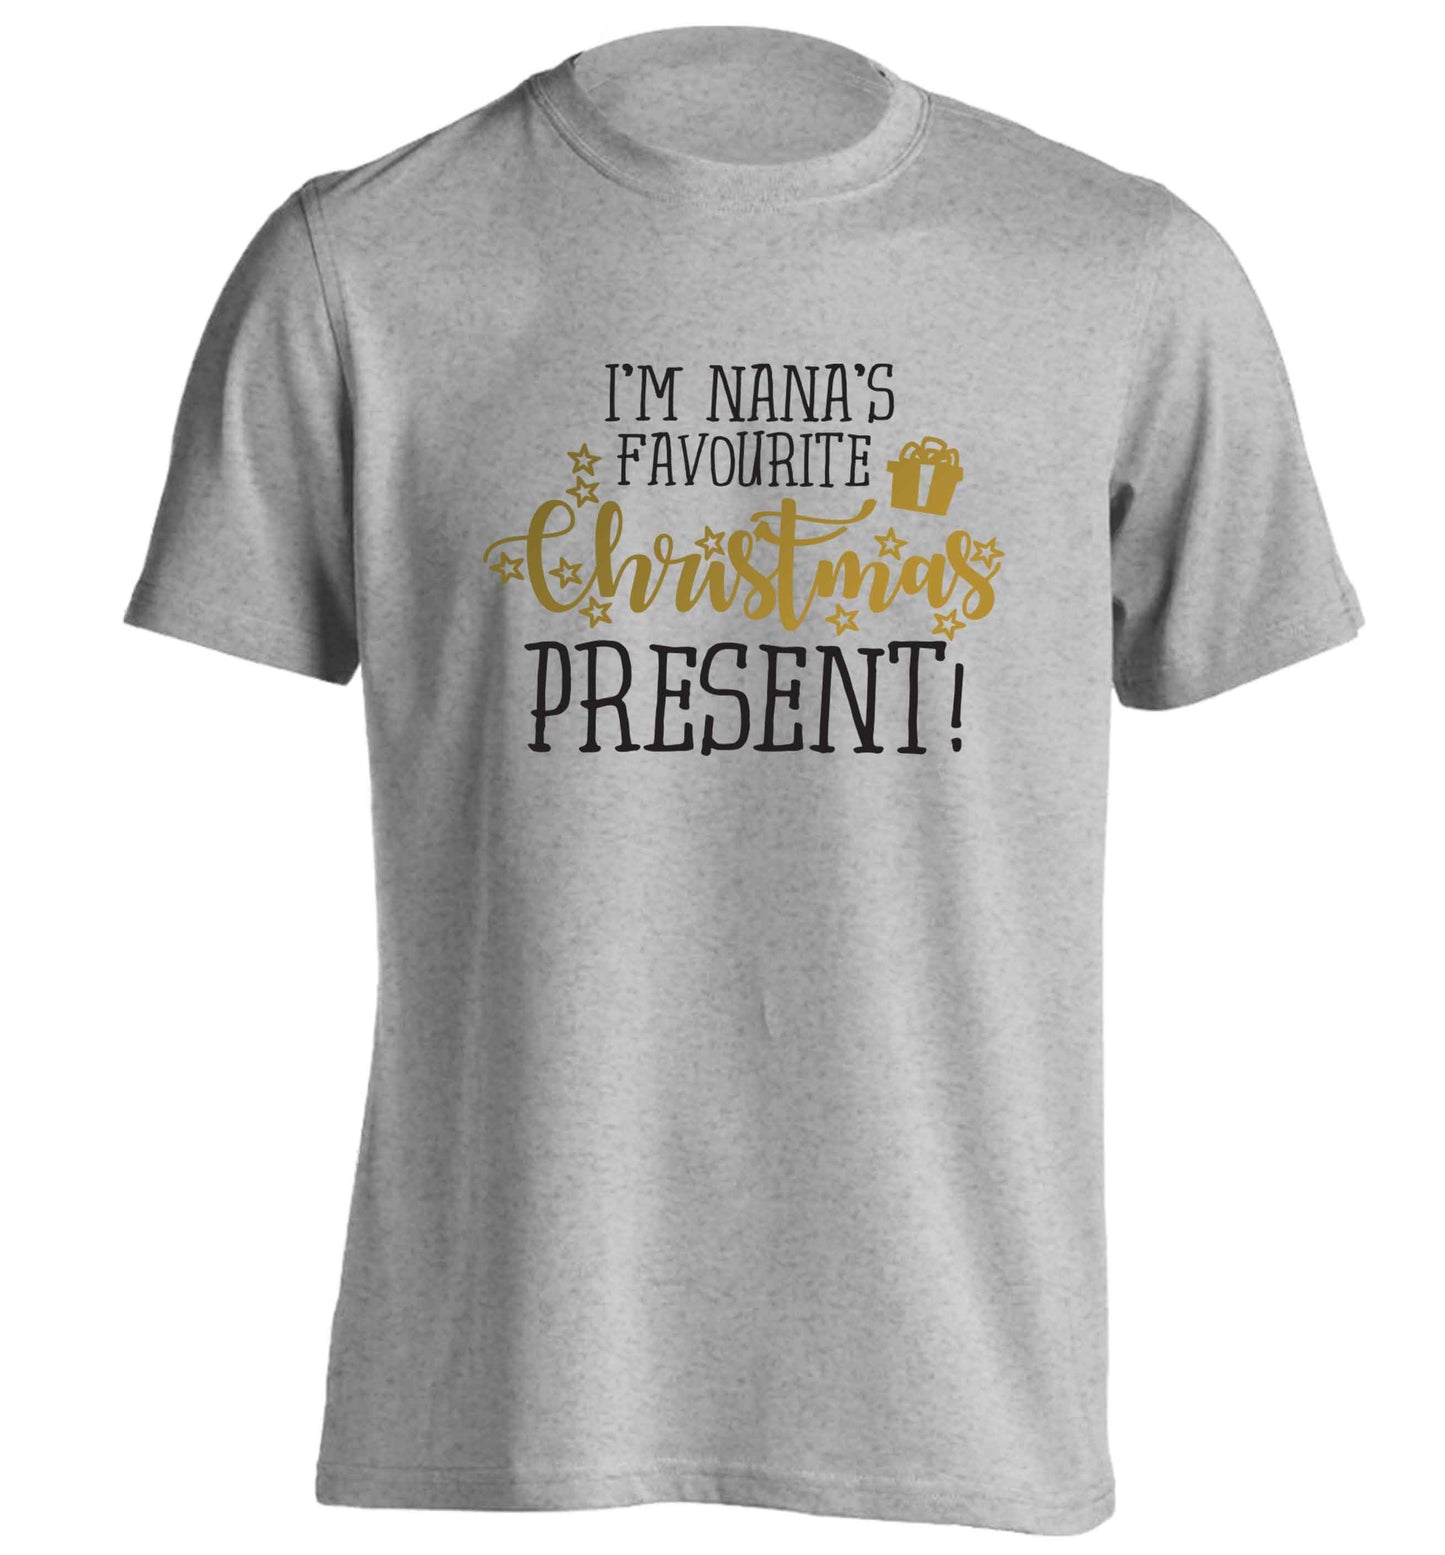 Nana's favourite Christmas present adults unisex grey Tshirt 2XL